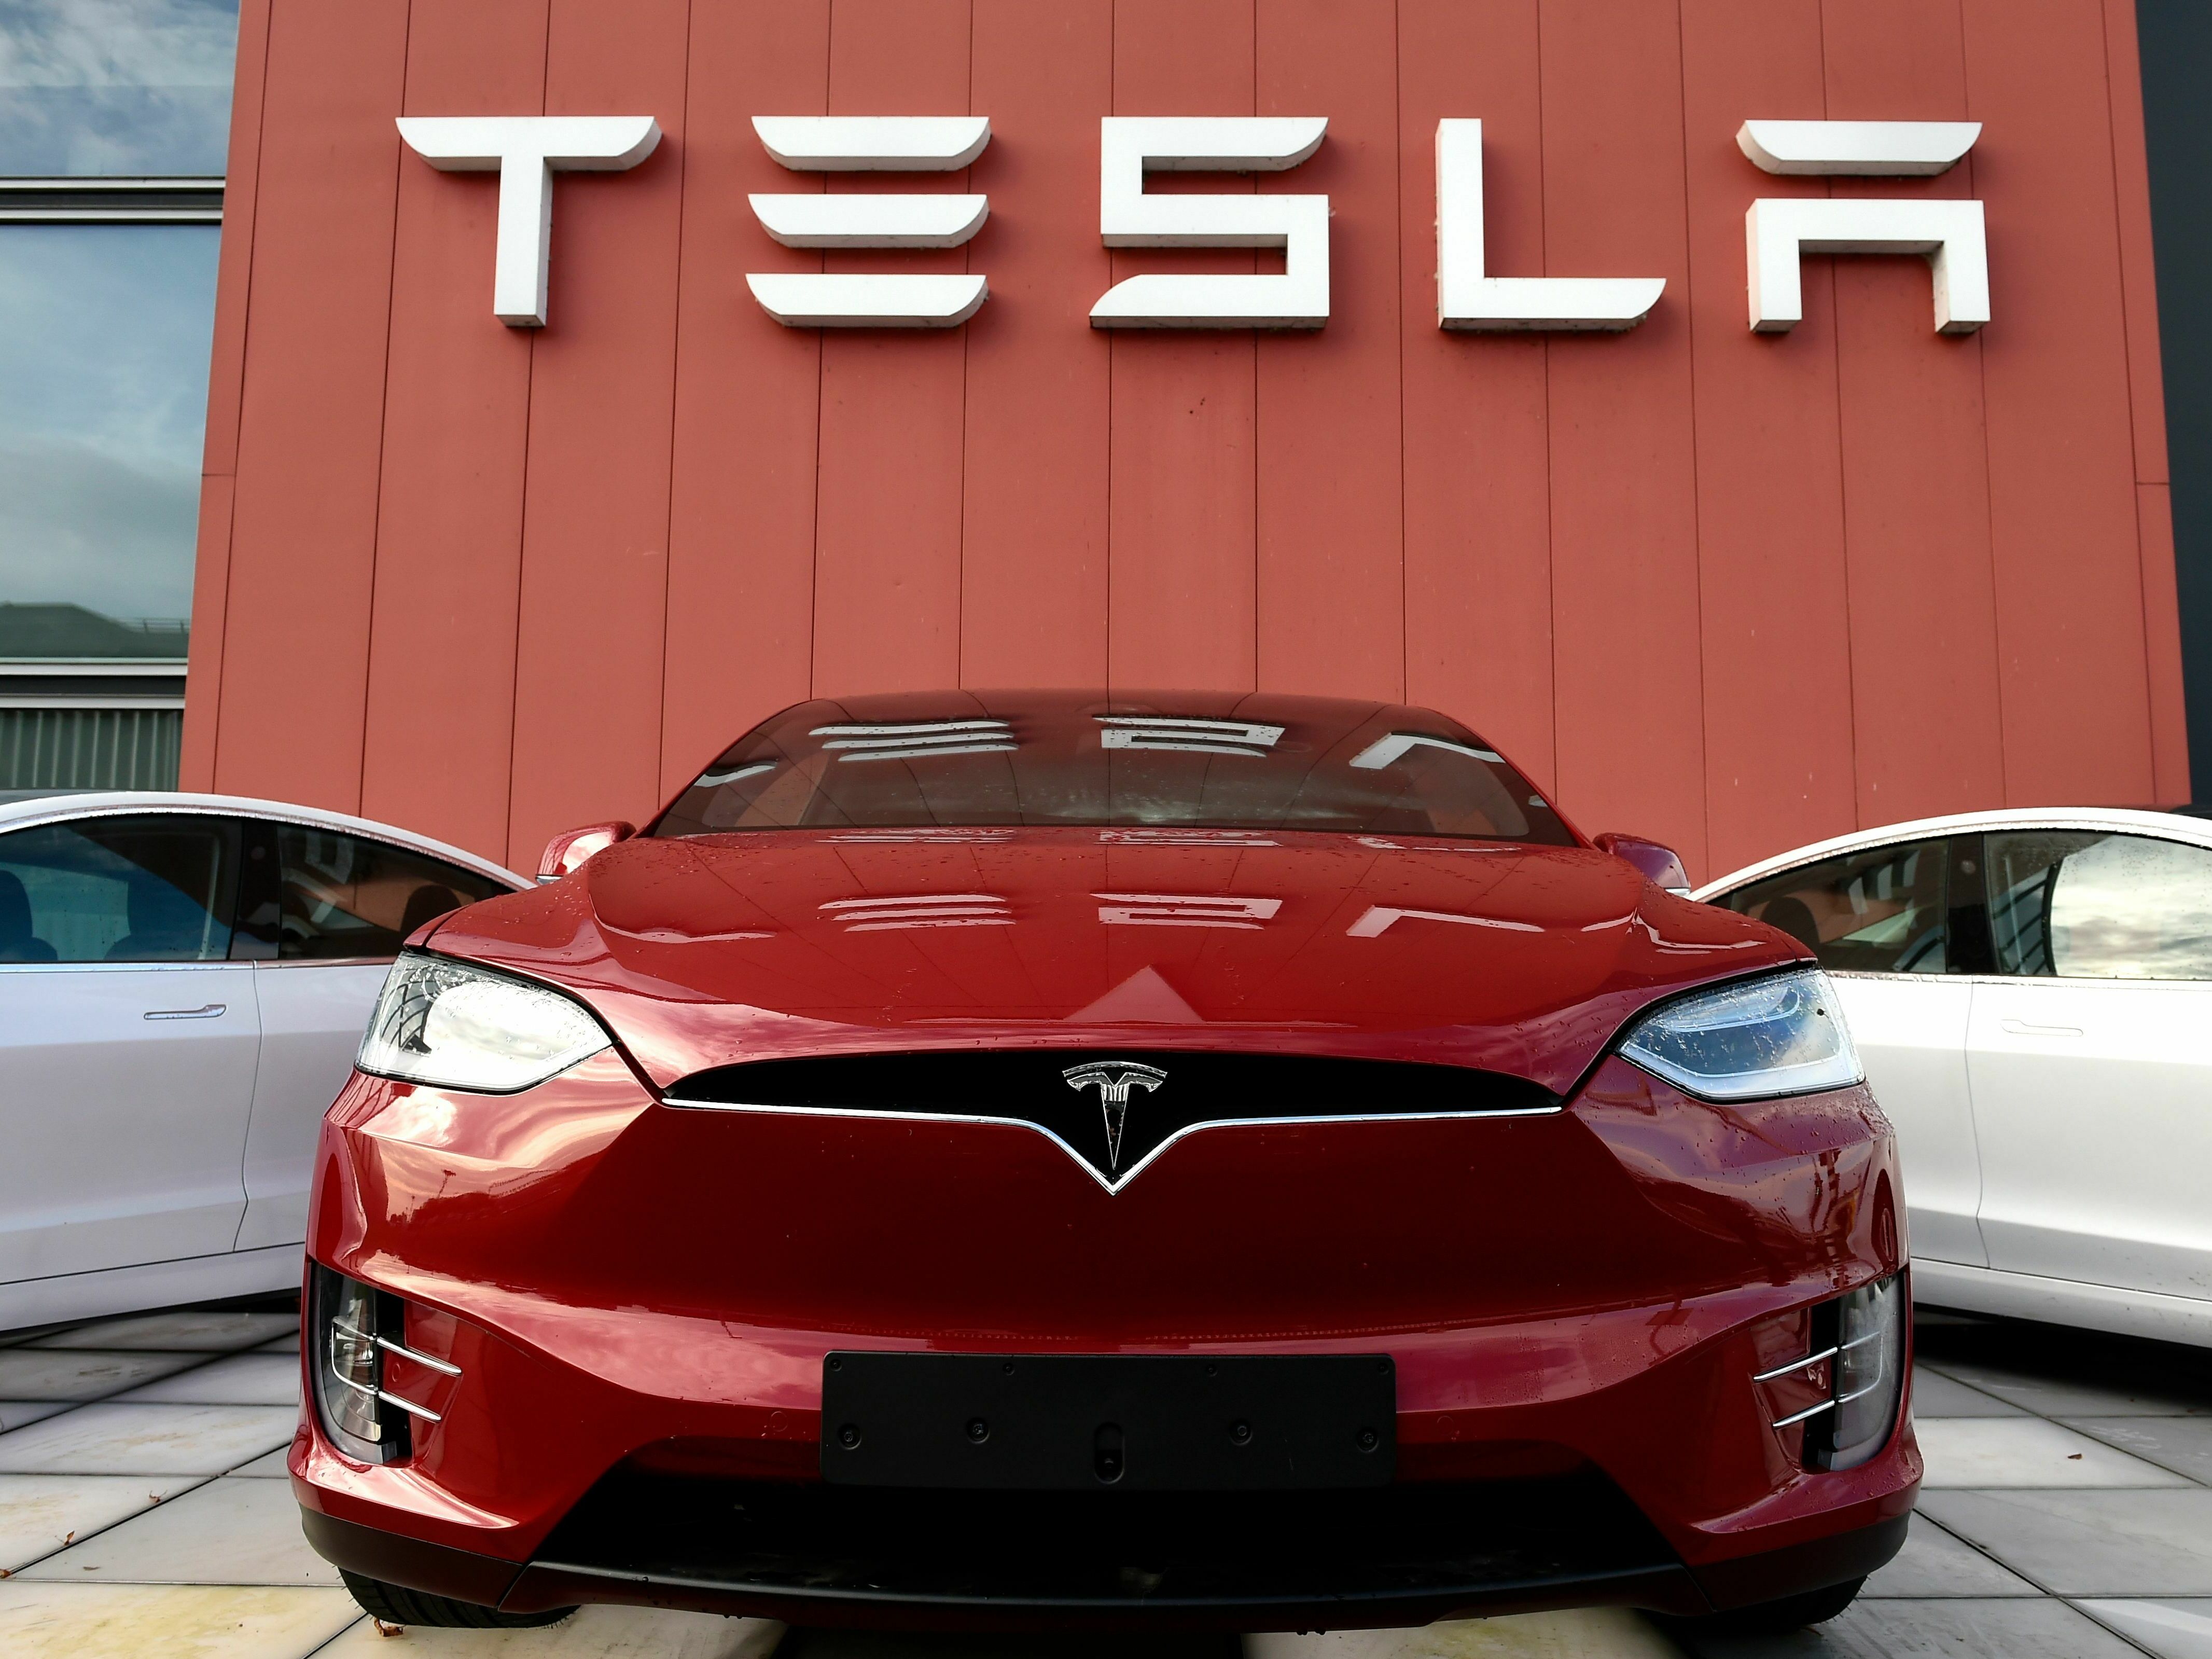 overrated companies - tesla car - Tesla